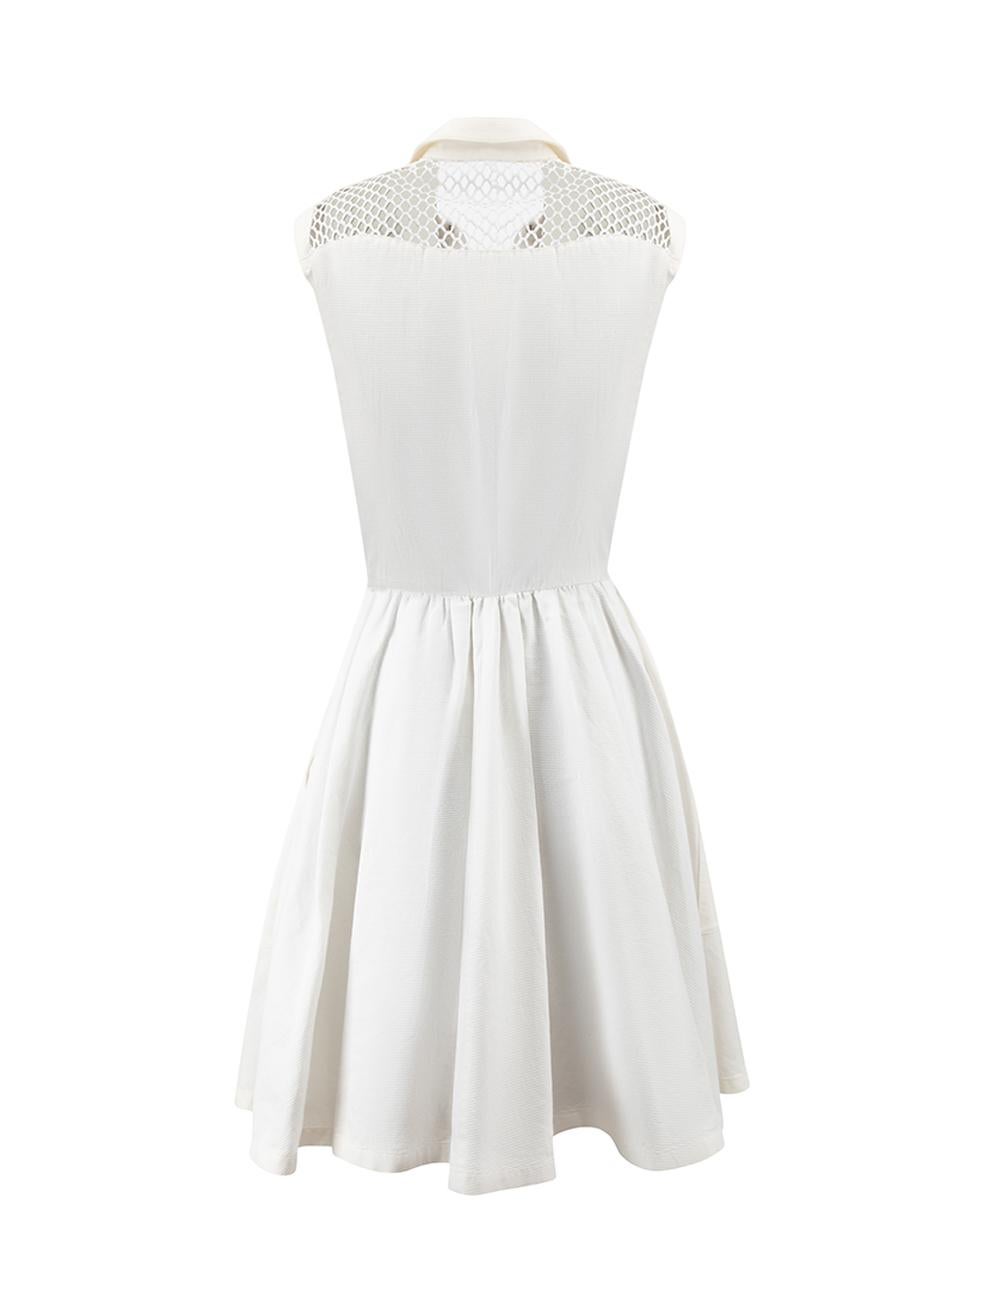 Mugler Vintage White Fishnet Detail Knee Length Shirt Dress Size M In Good Condition For Sale In London, GB